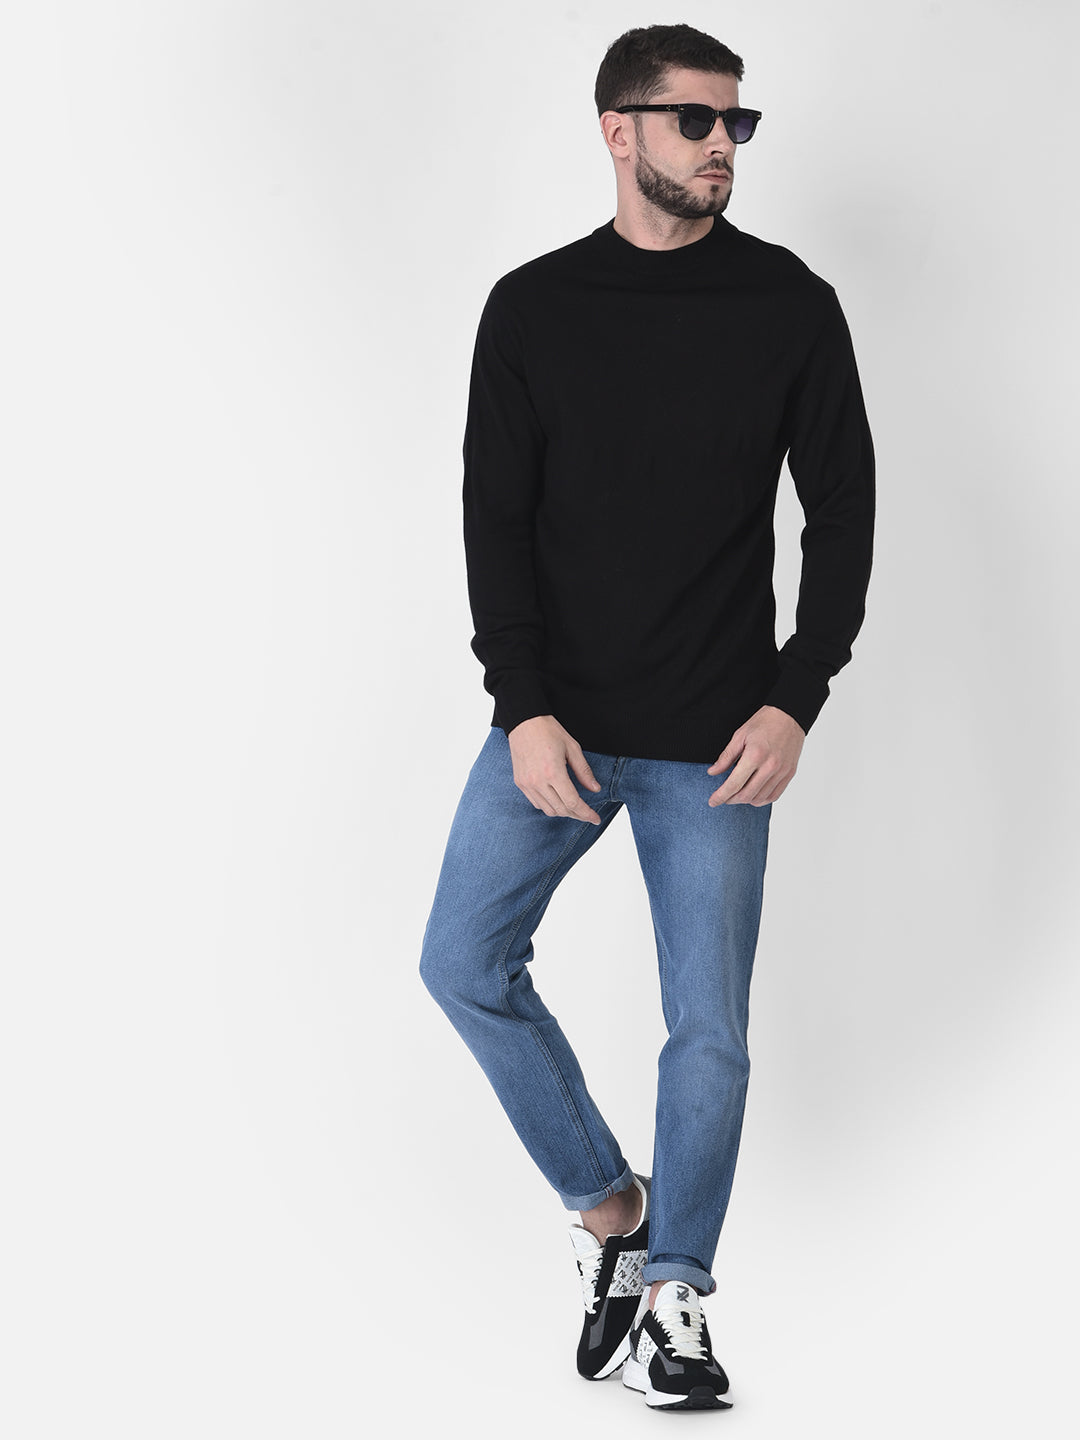 Cobb Black Solid Round Neck Sweater